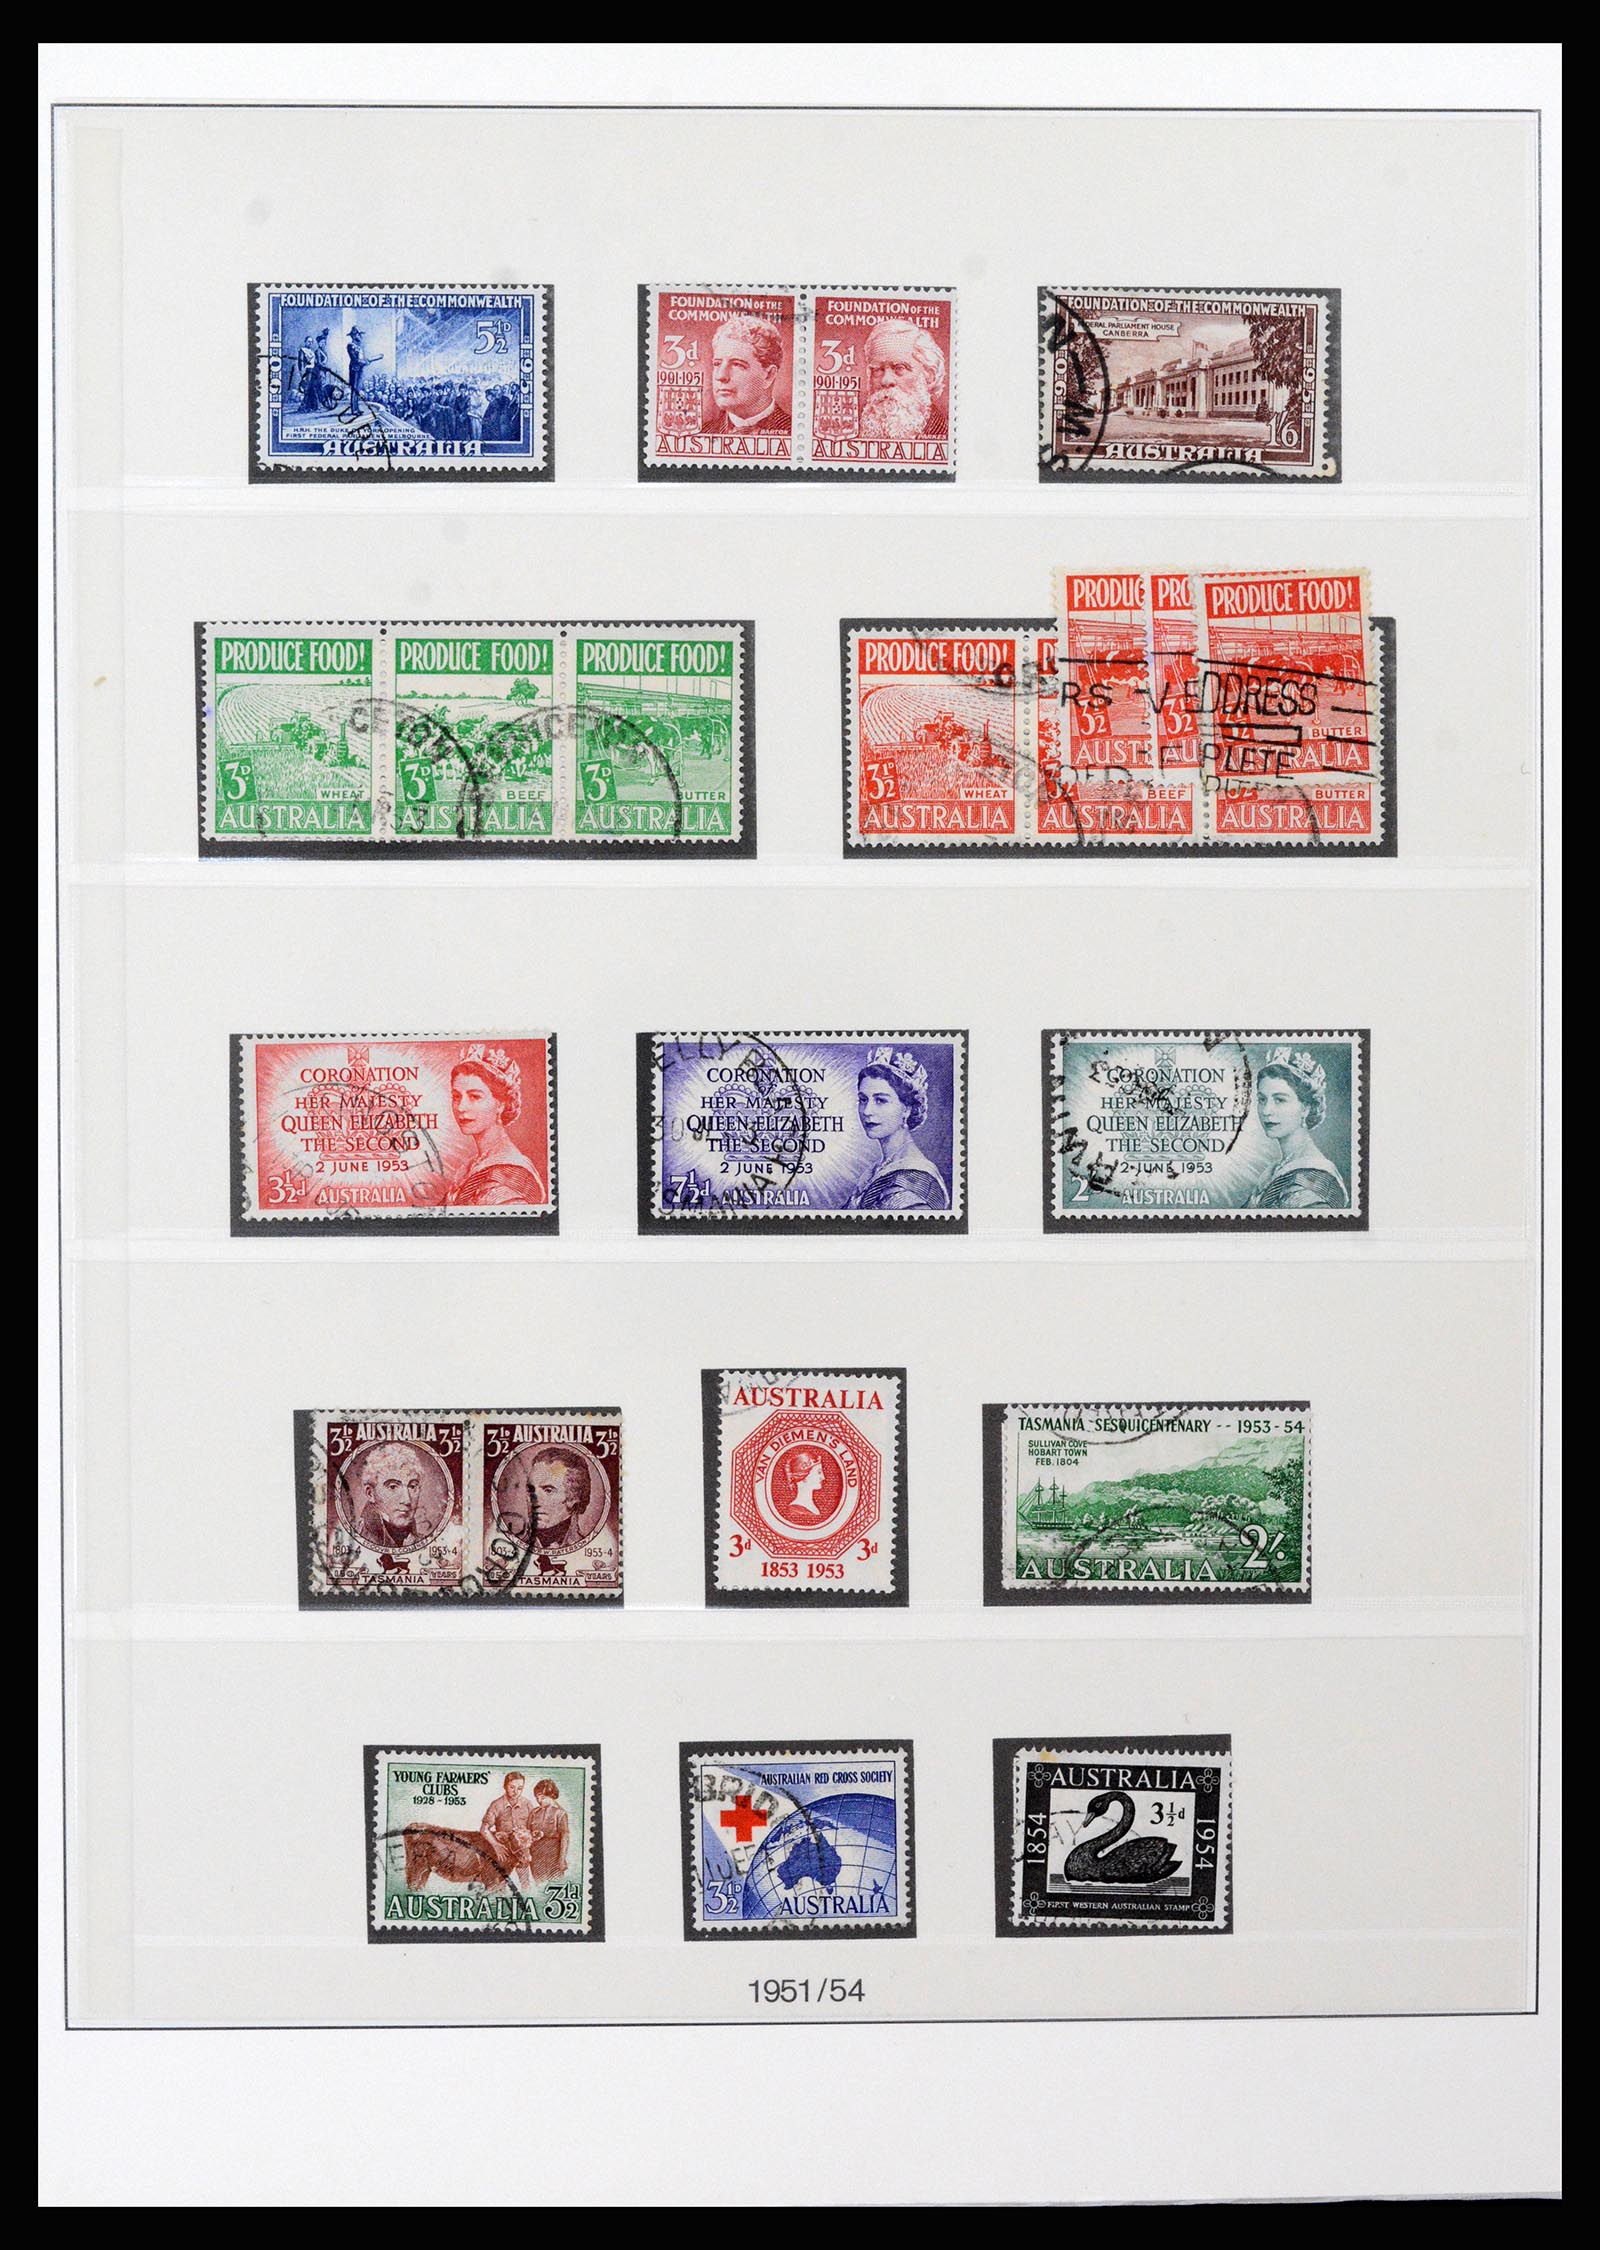 37259 001 - Stamp collection 37259 Australia 1951-2006.